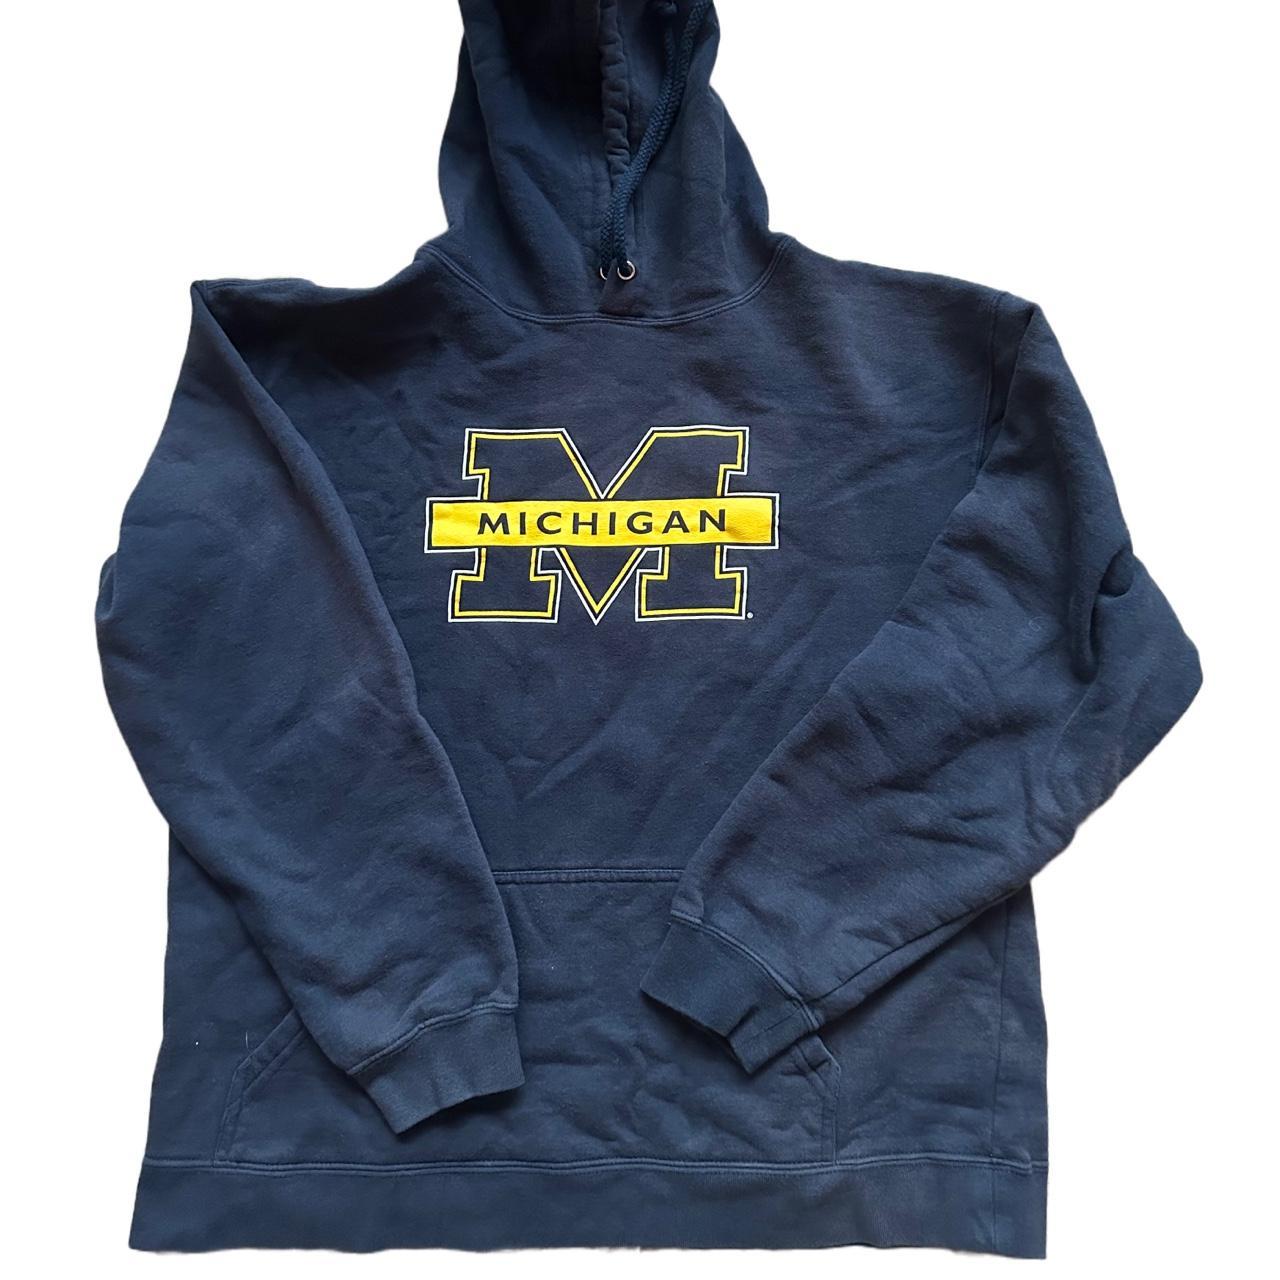 Block M/Banner Michigan hoodie Size: L, but seems... - Depop